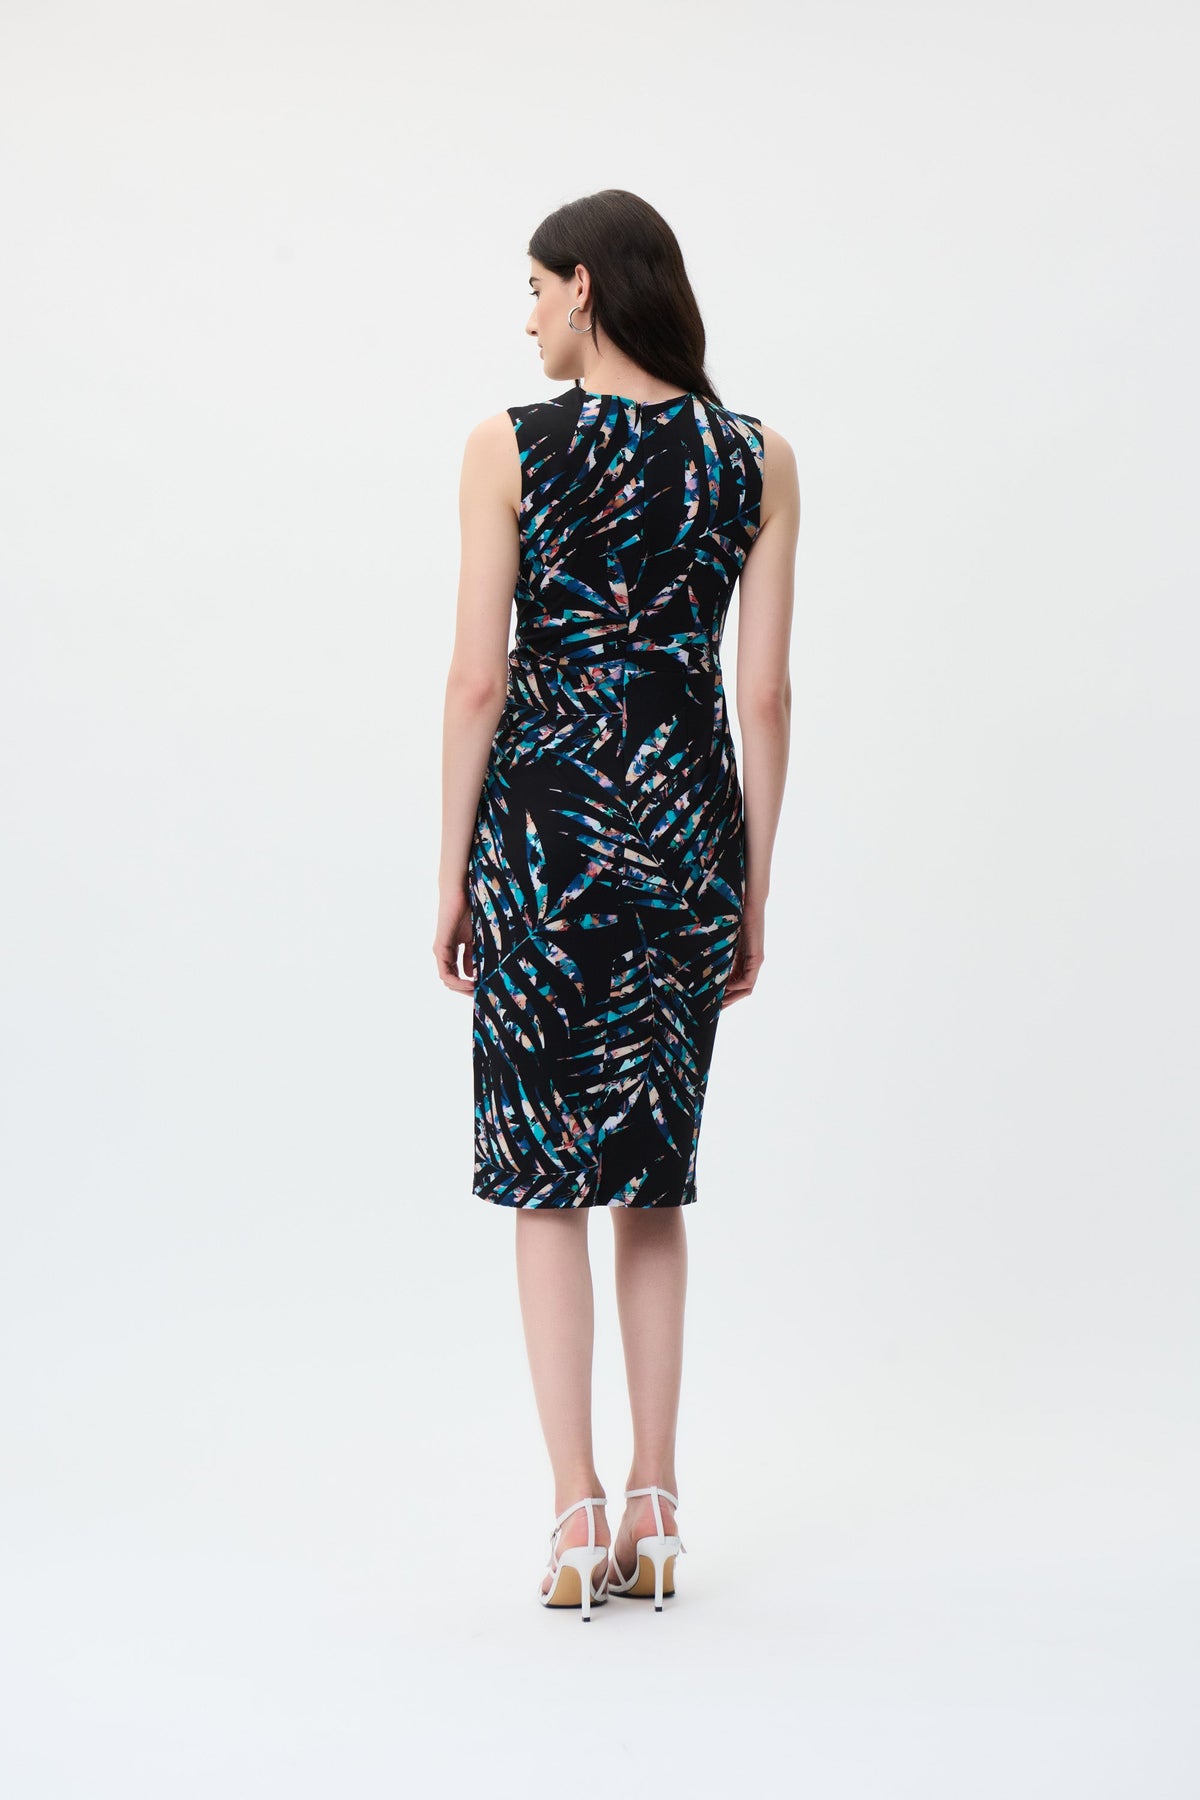 Joseph Ribkoff Dress Style 231108 – Modella Signature